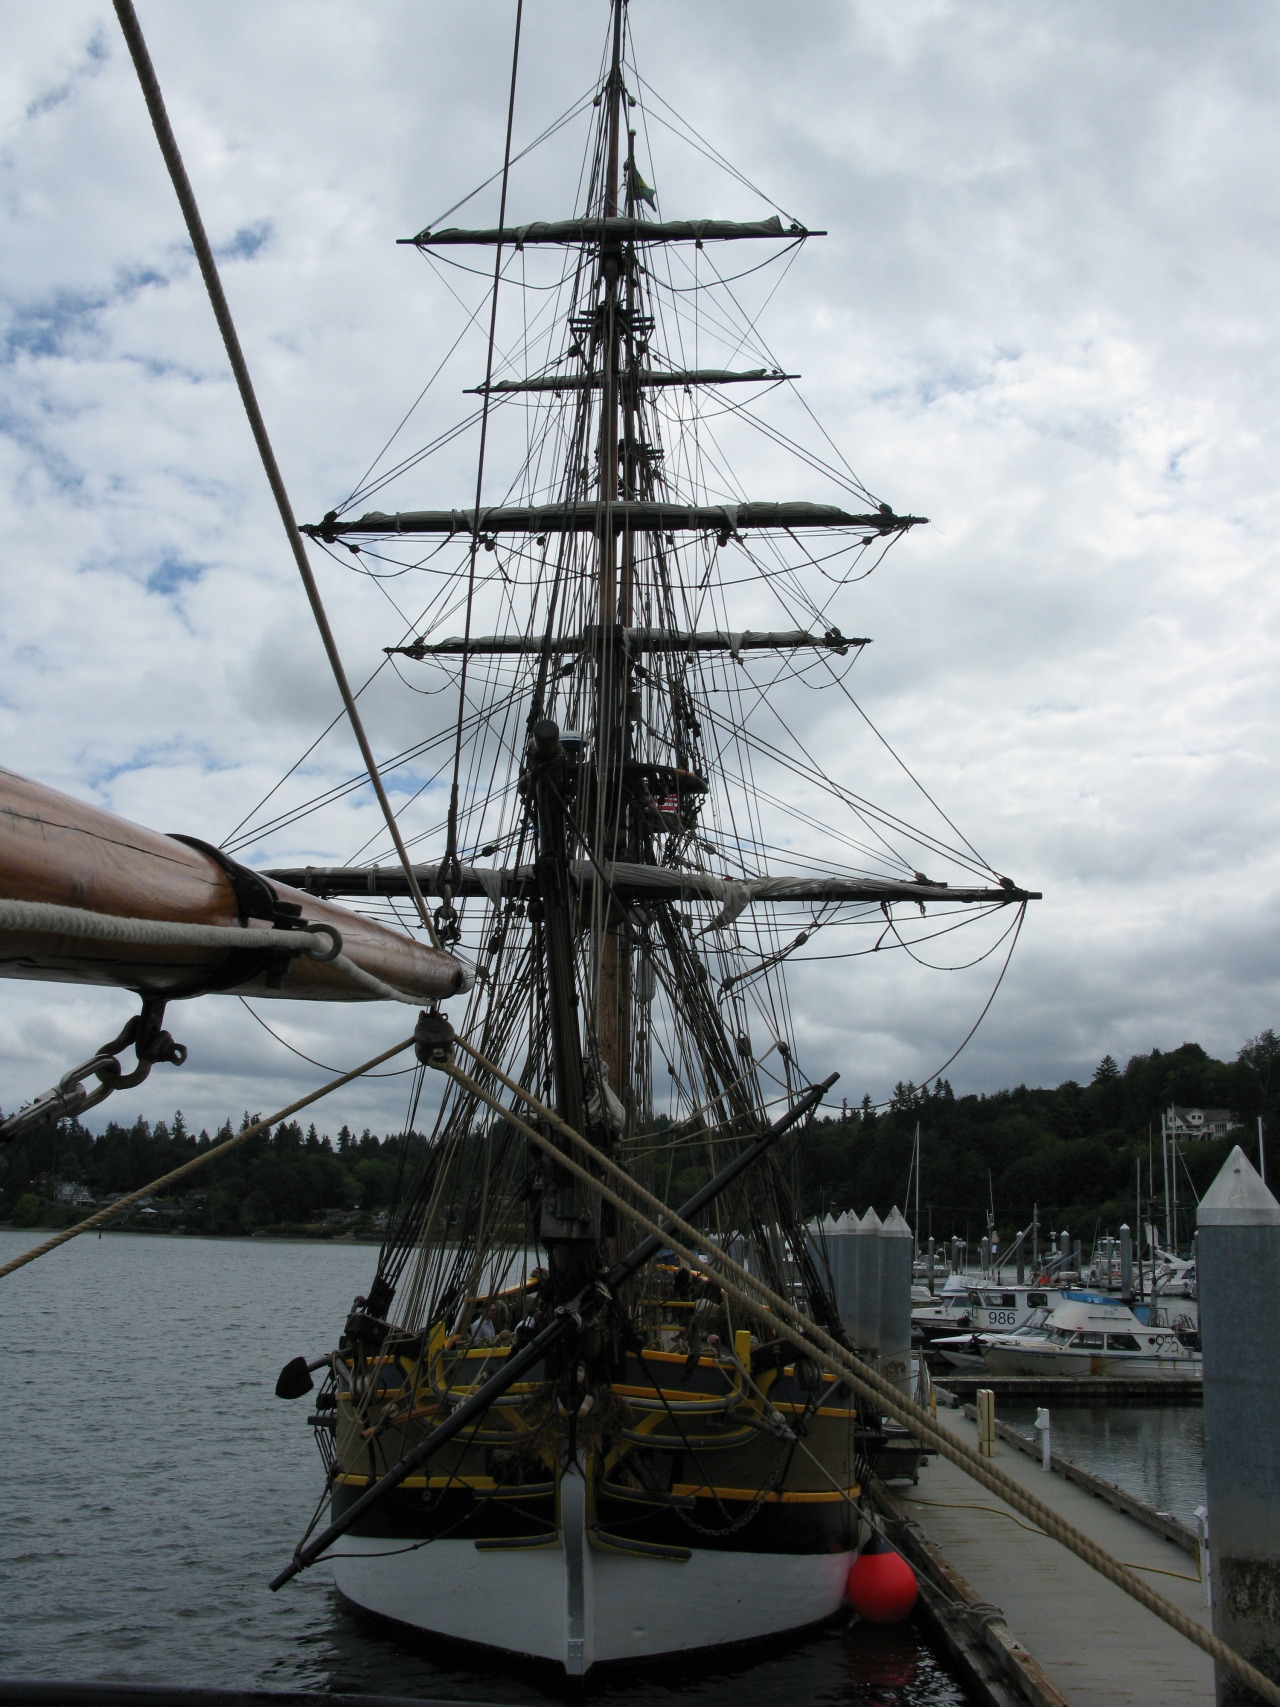 Lady Washington from the stern of Hawaiian Chieftain - Brownsville, Washington August 9, 2016